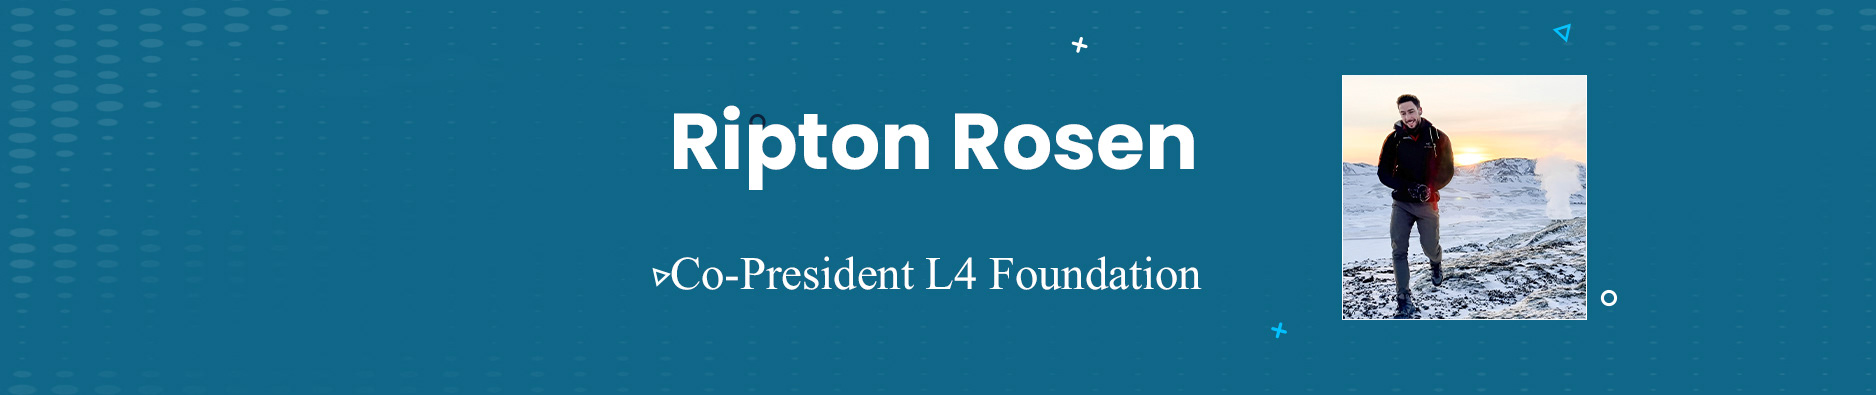 Ripton Rosen's profile banner